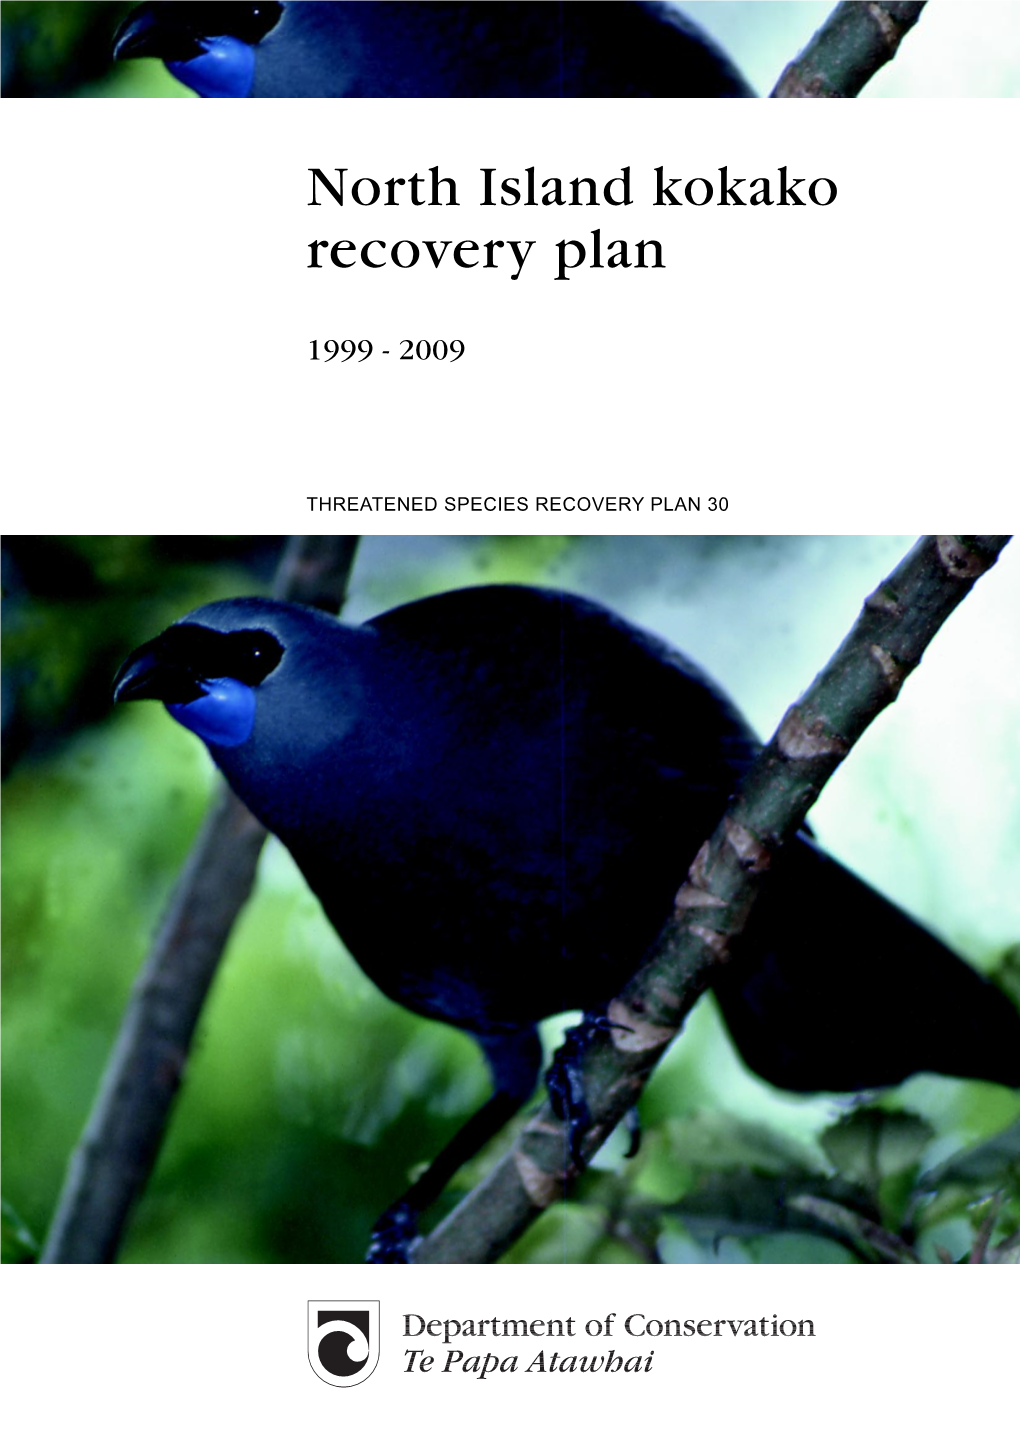 North Island Kokako Recovery Plan